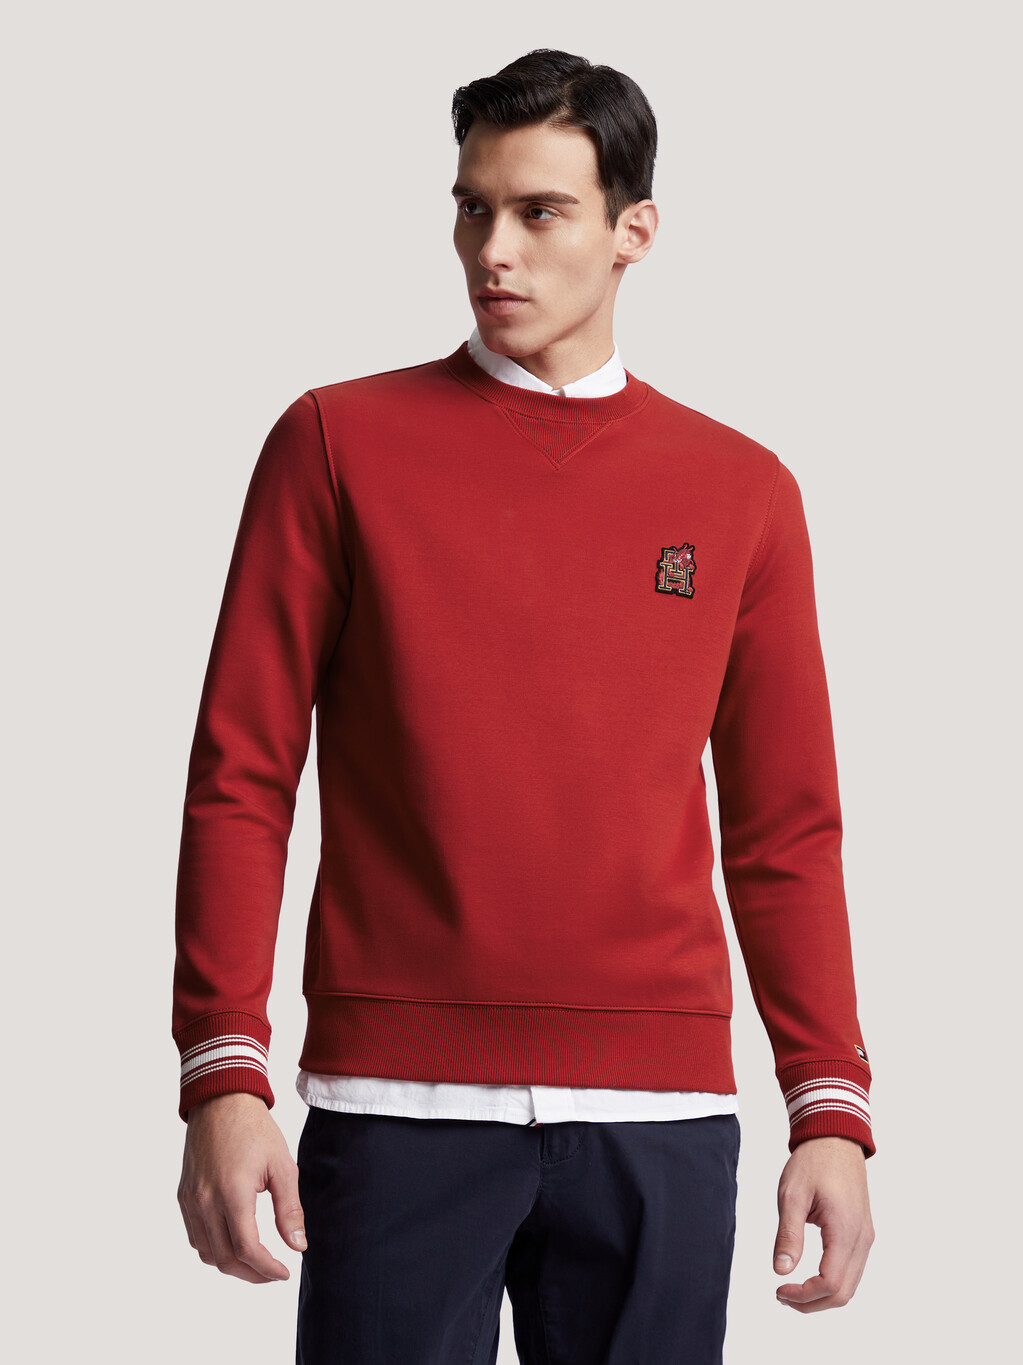 CNY Monogram Sweatshirt, red